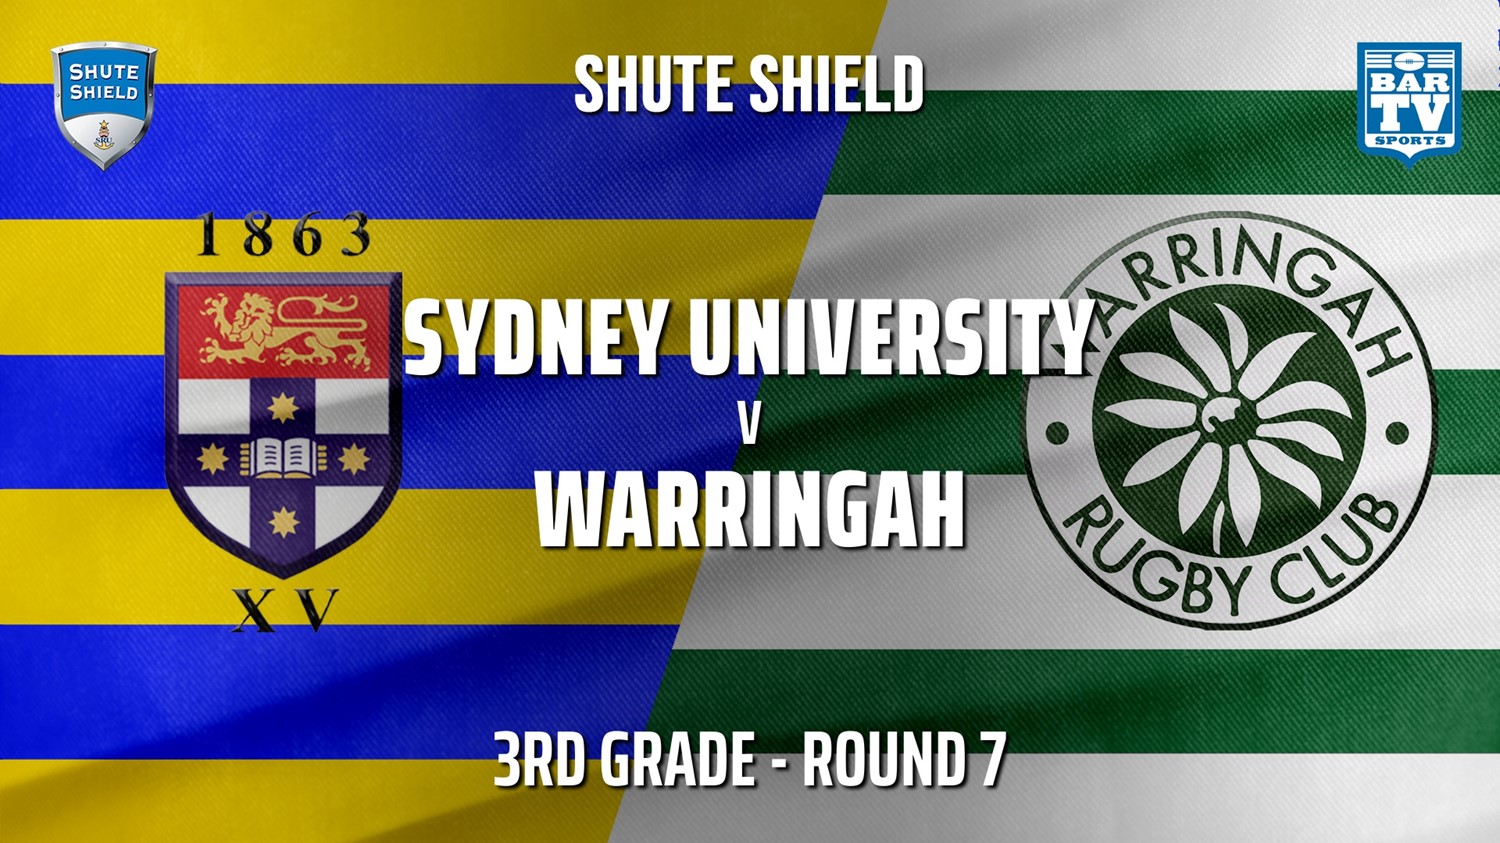 210522-Shute Shield Round 7 - 3rd Grade - Sydney University v Warringah Slate Image